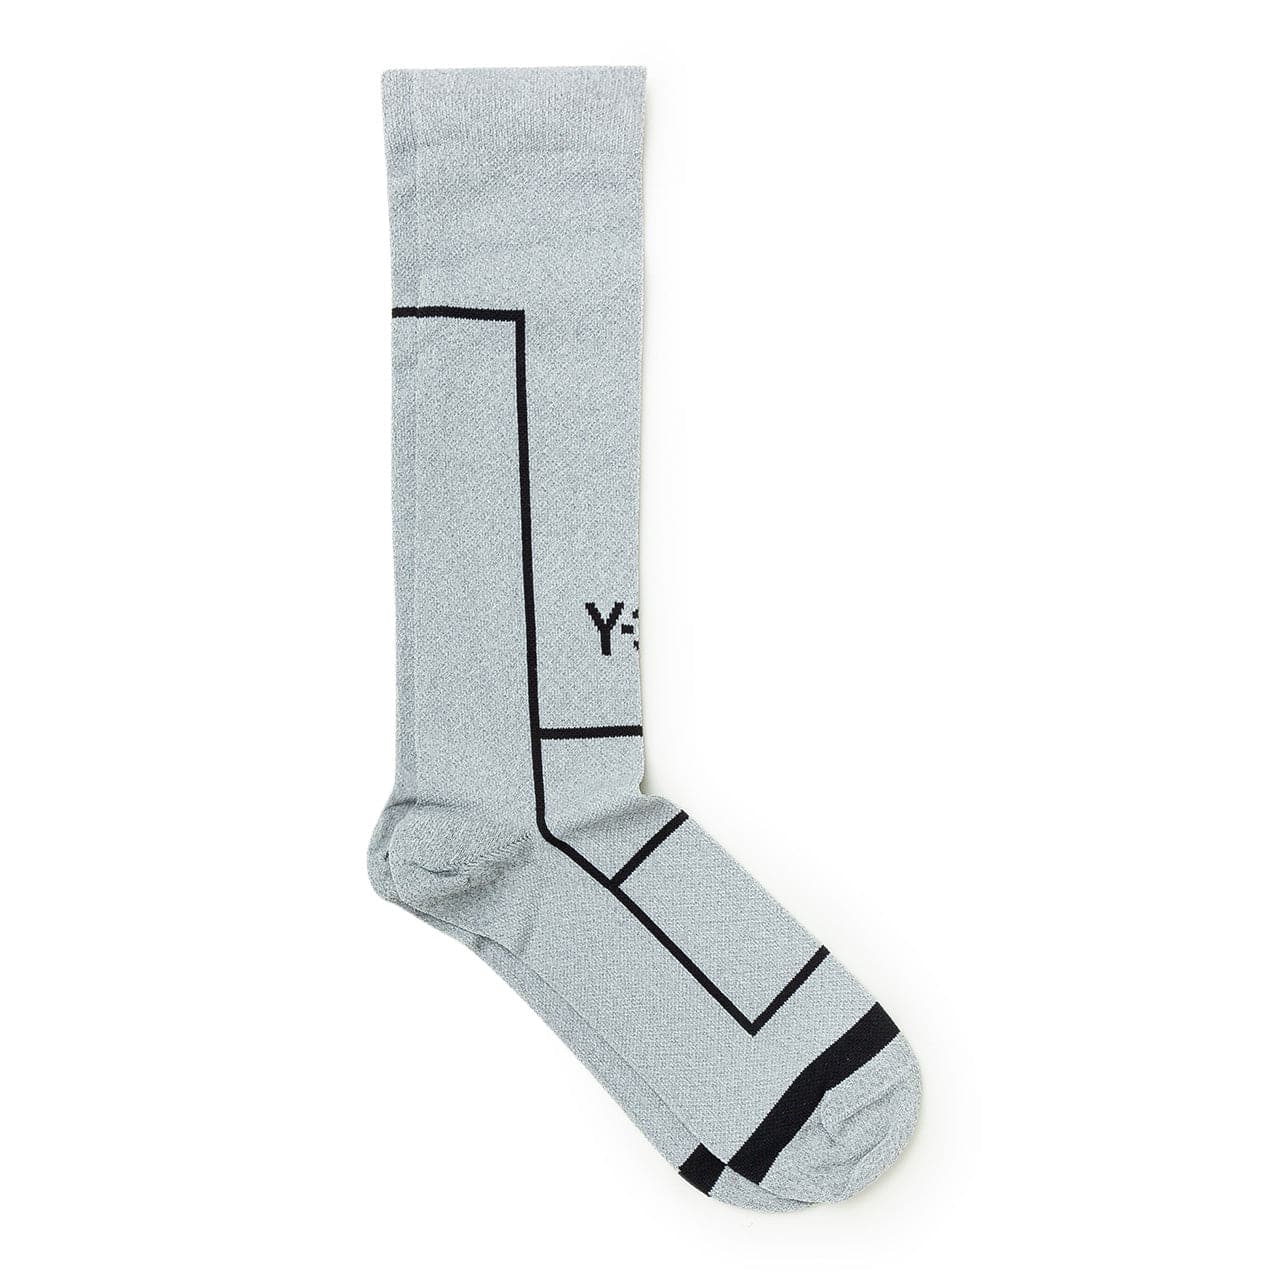 Image of adidas Y-3 Reflective Socks (Grey / Black)